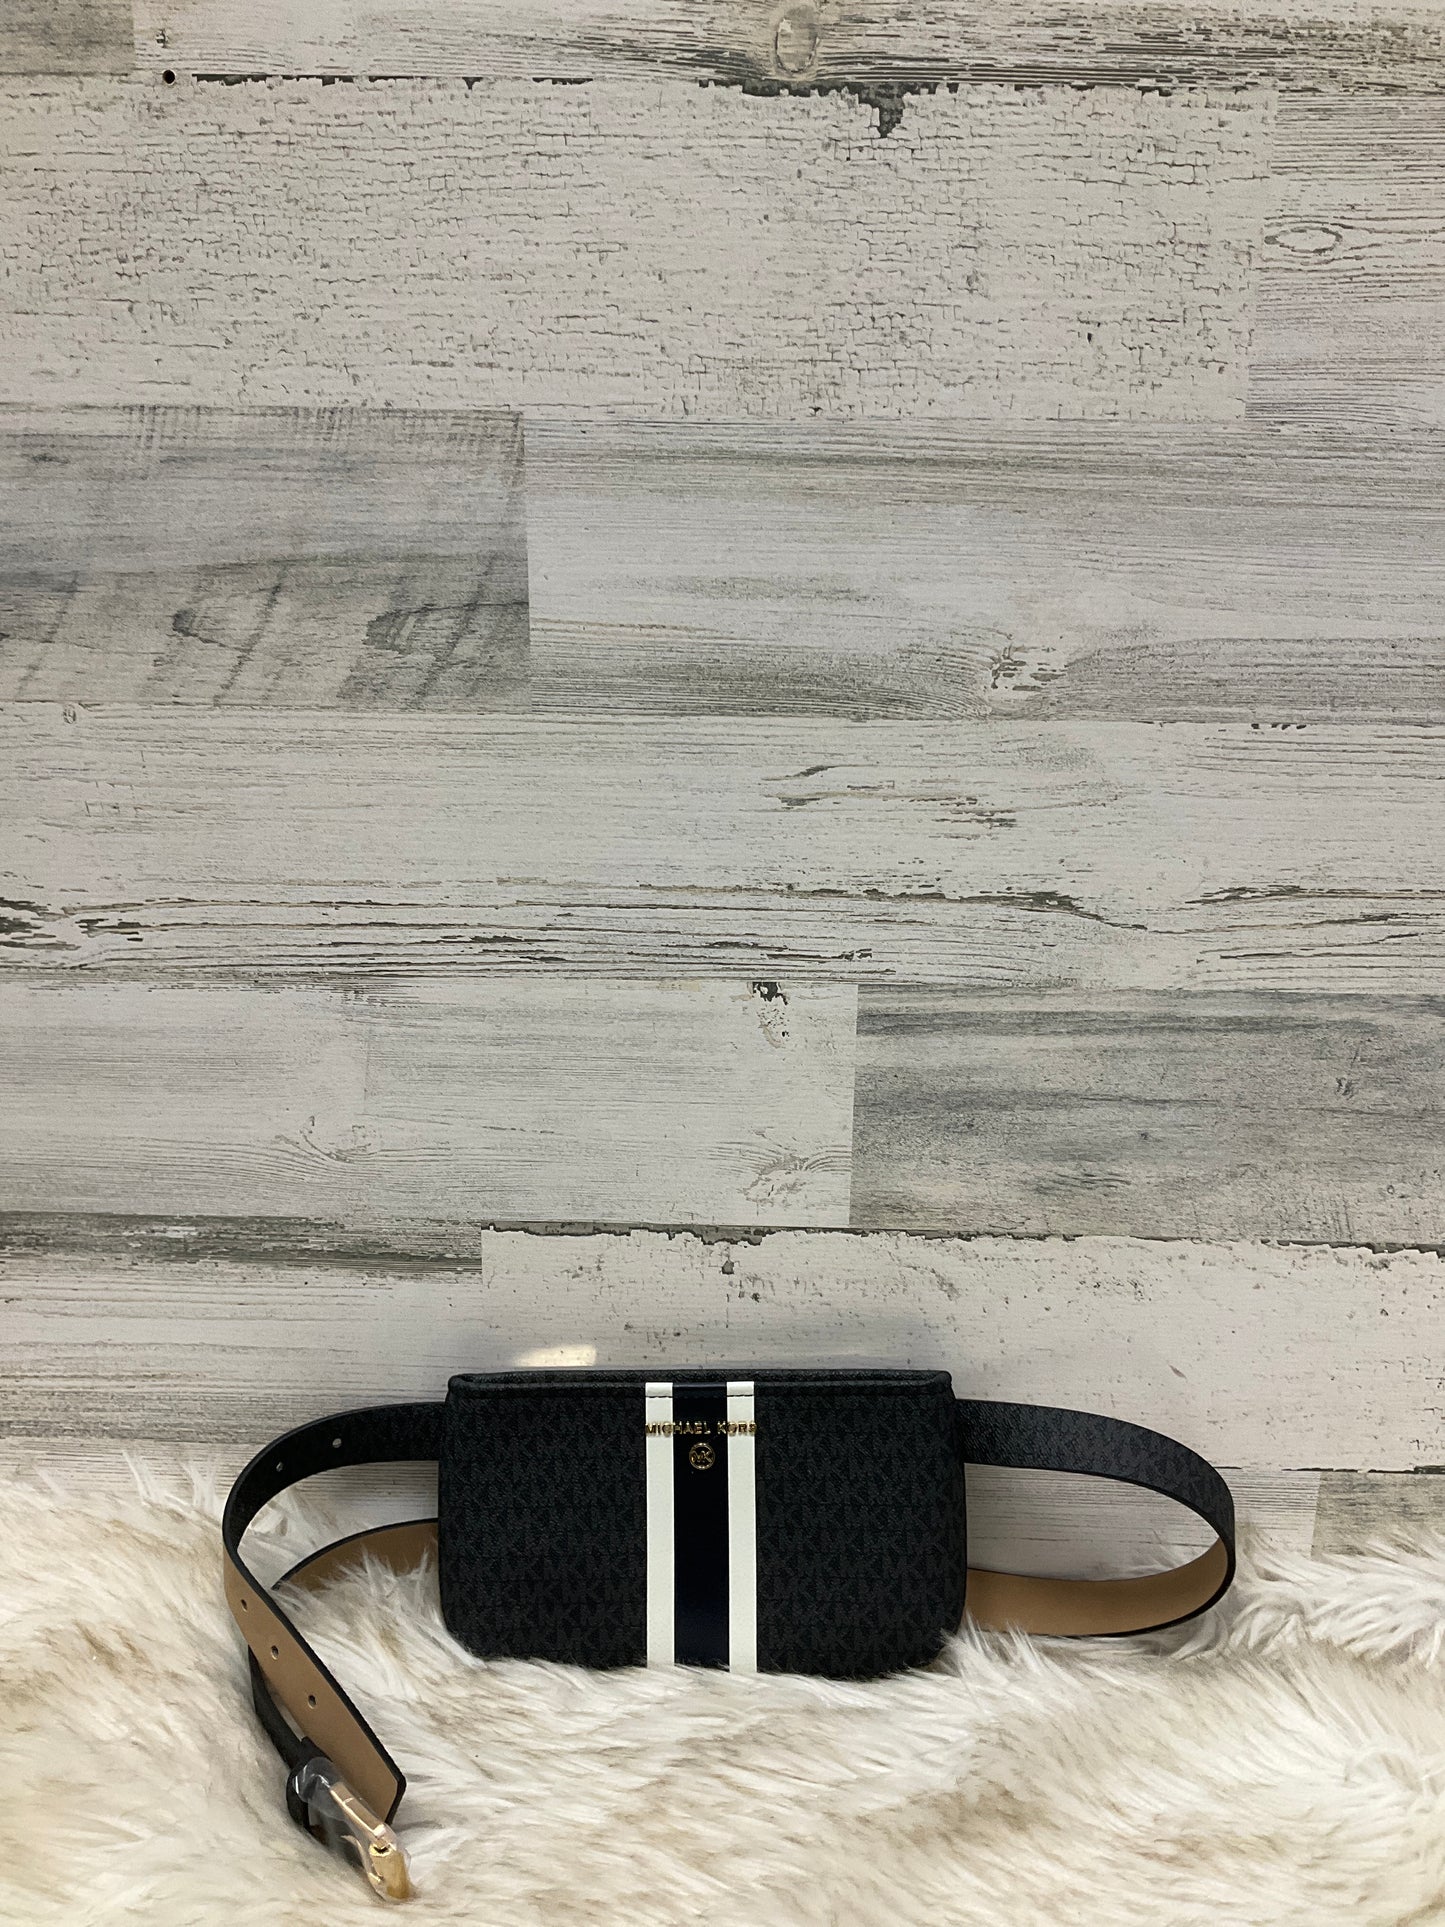 Belt Bag Designer By Michael Kors  Size: Small